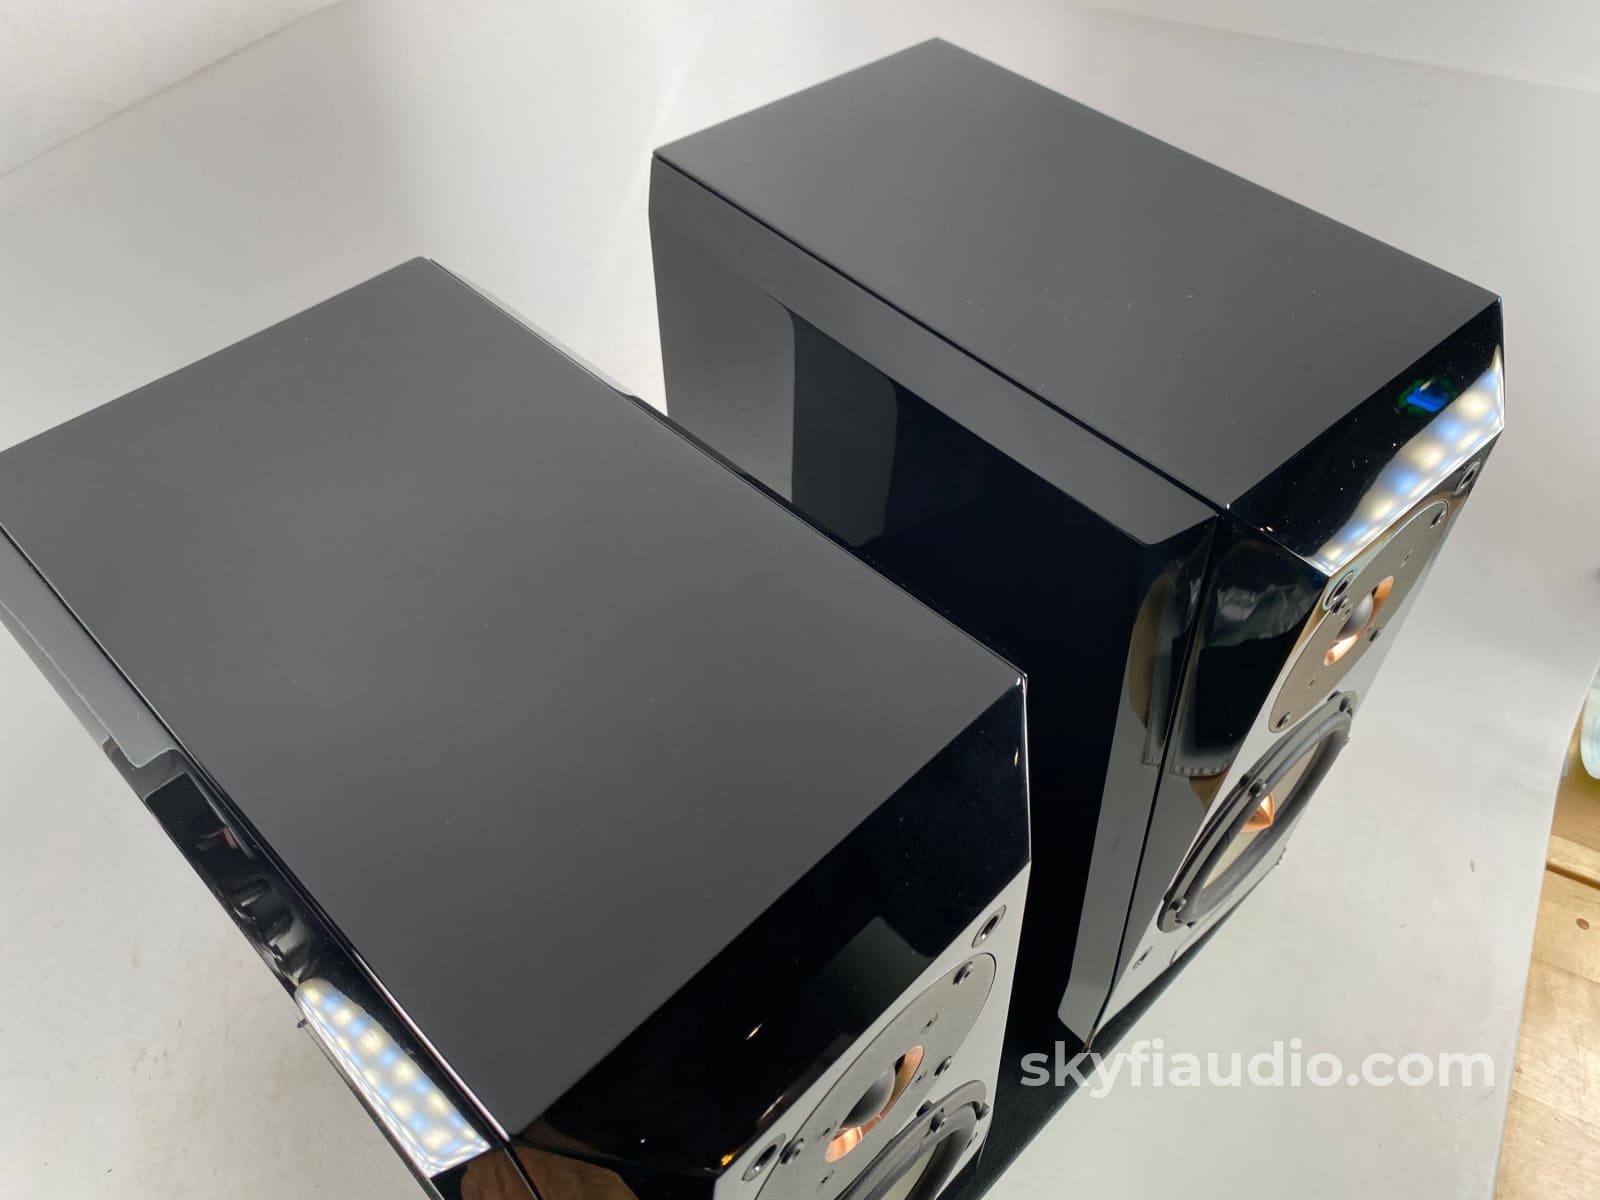 Joseph Audio Pulsar Gorgeous Two-Way Bookshelf Speakers